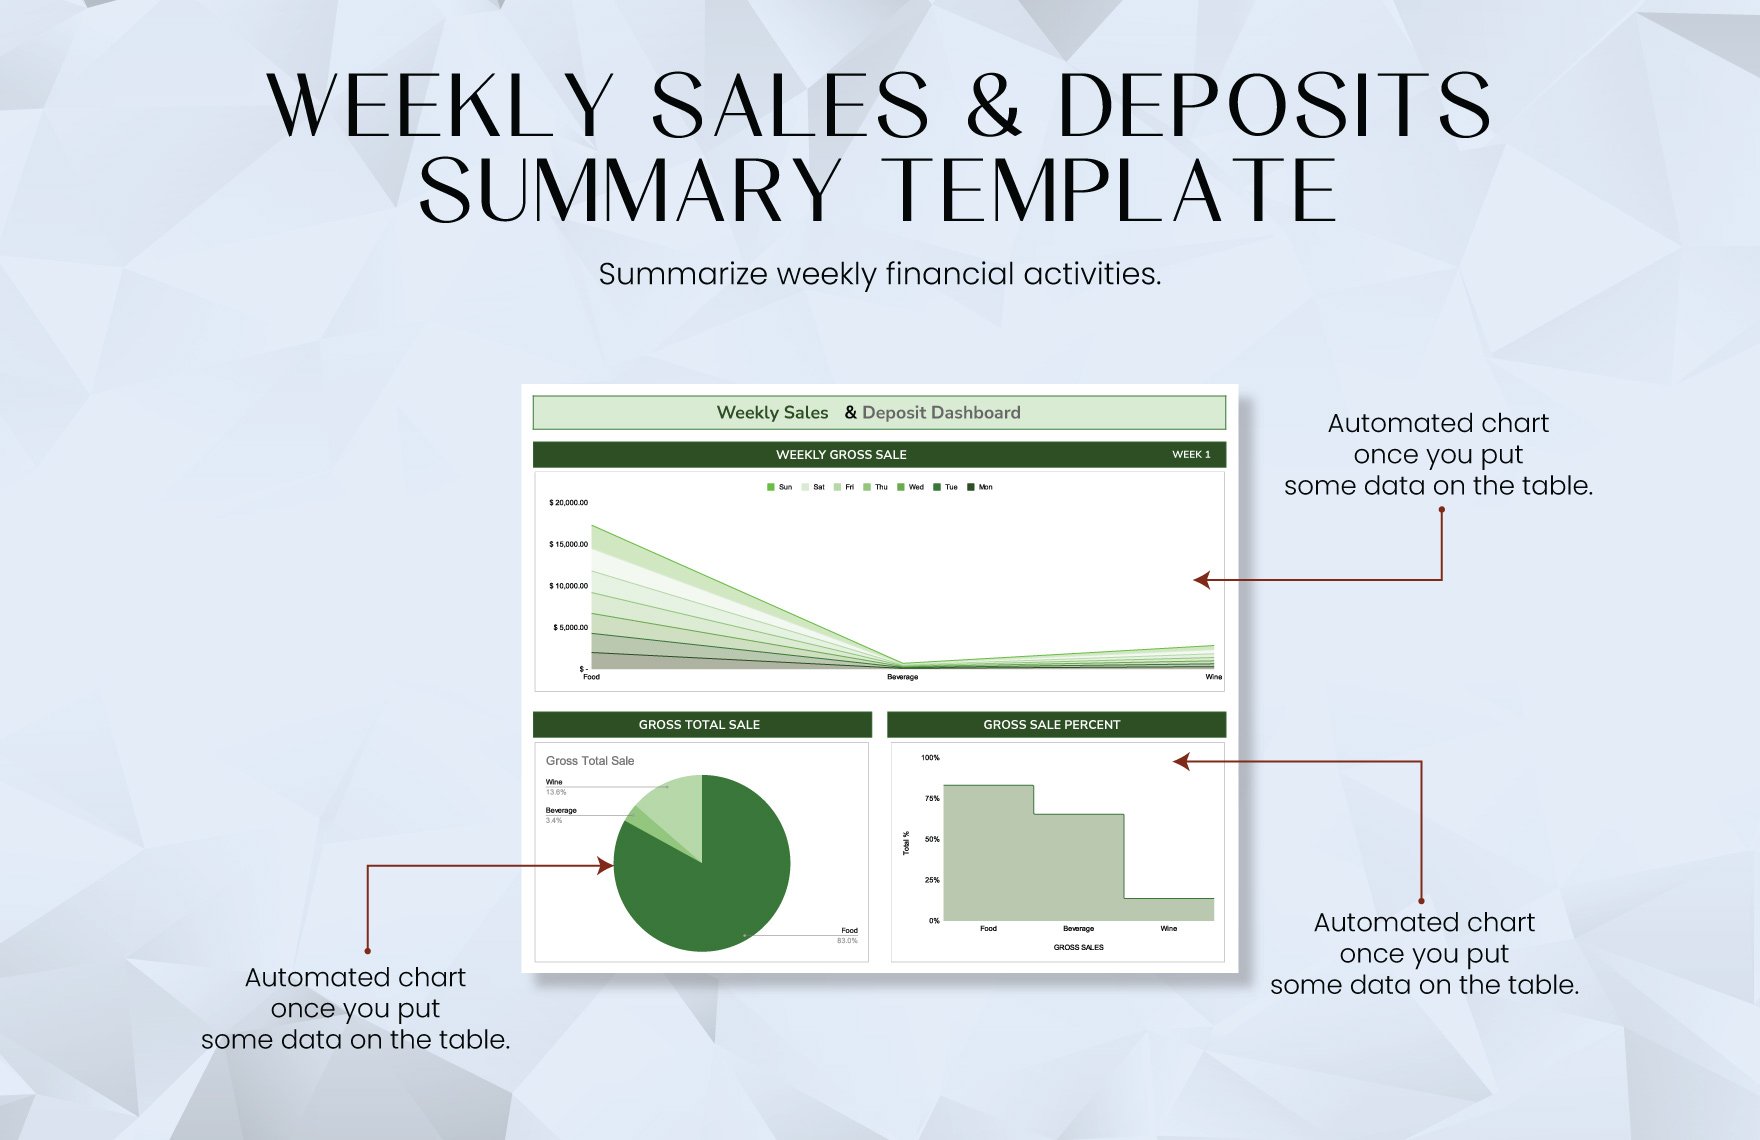 Weekly Sales & Deposits Summary Template